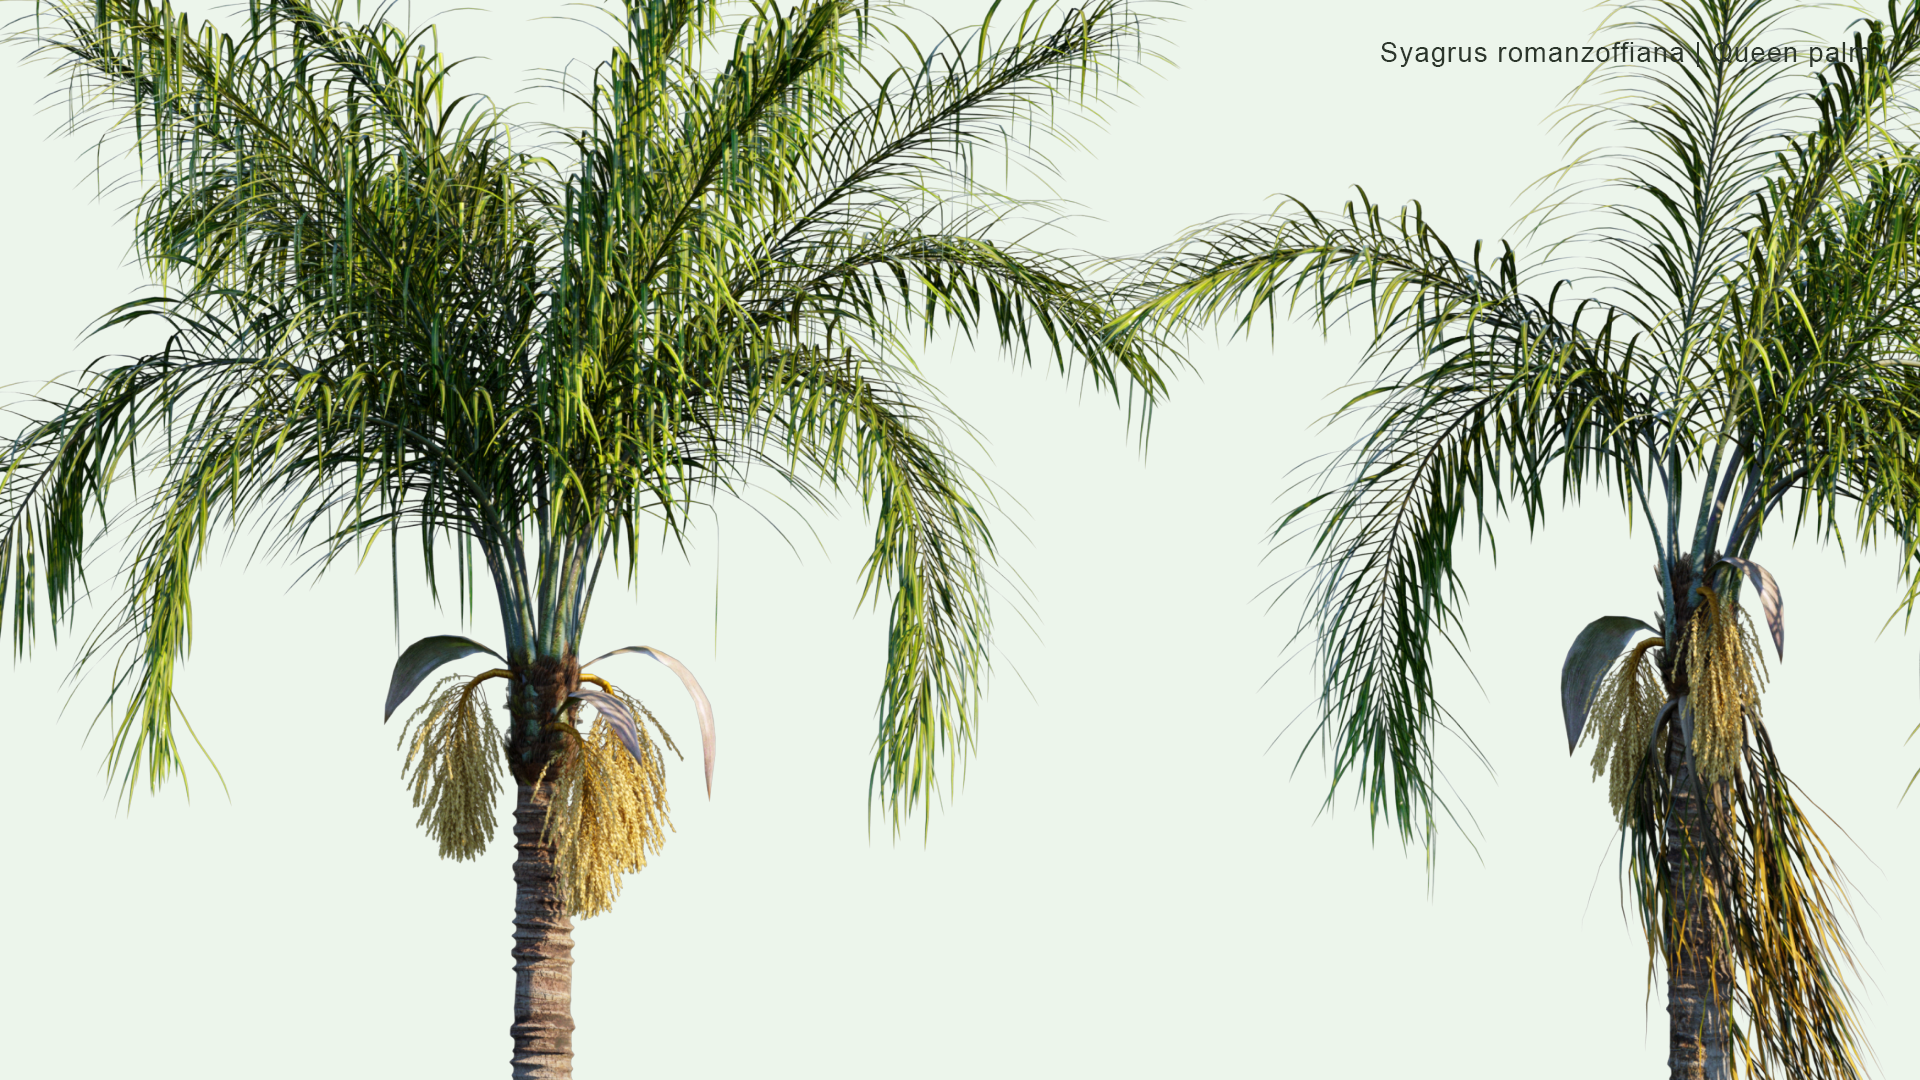 2D Syagrus Romanzoffiana - Queen Palm, Cocos Palm